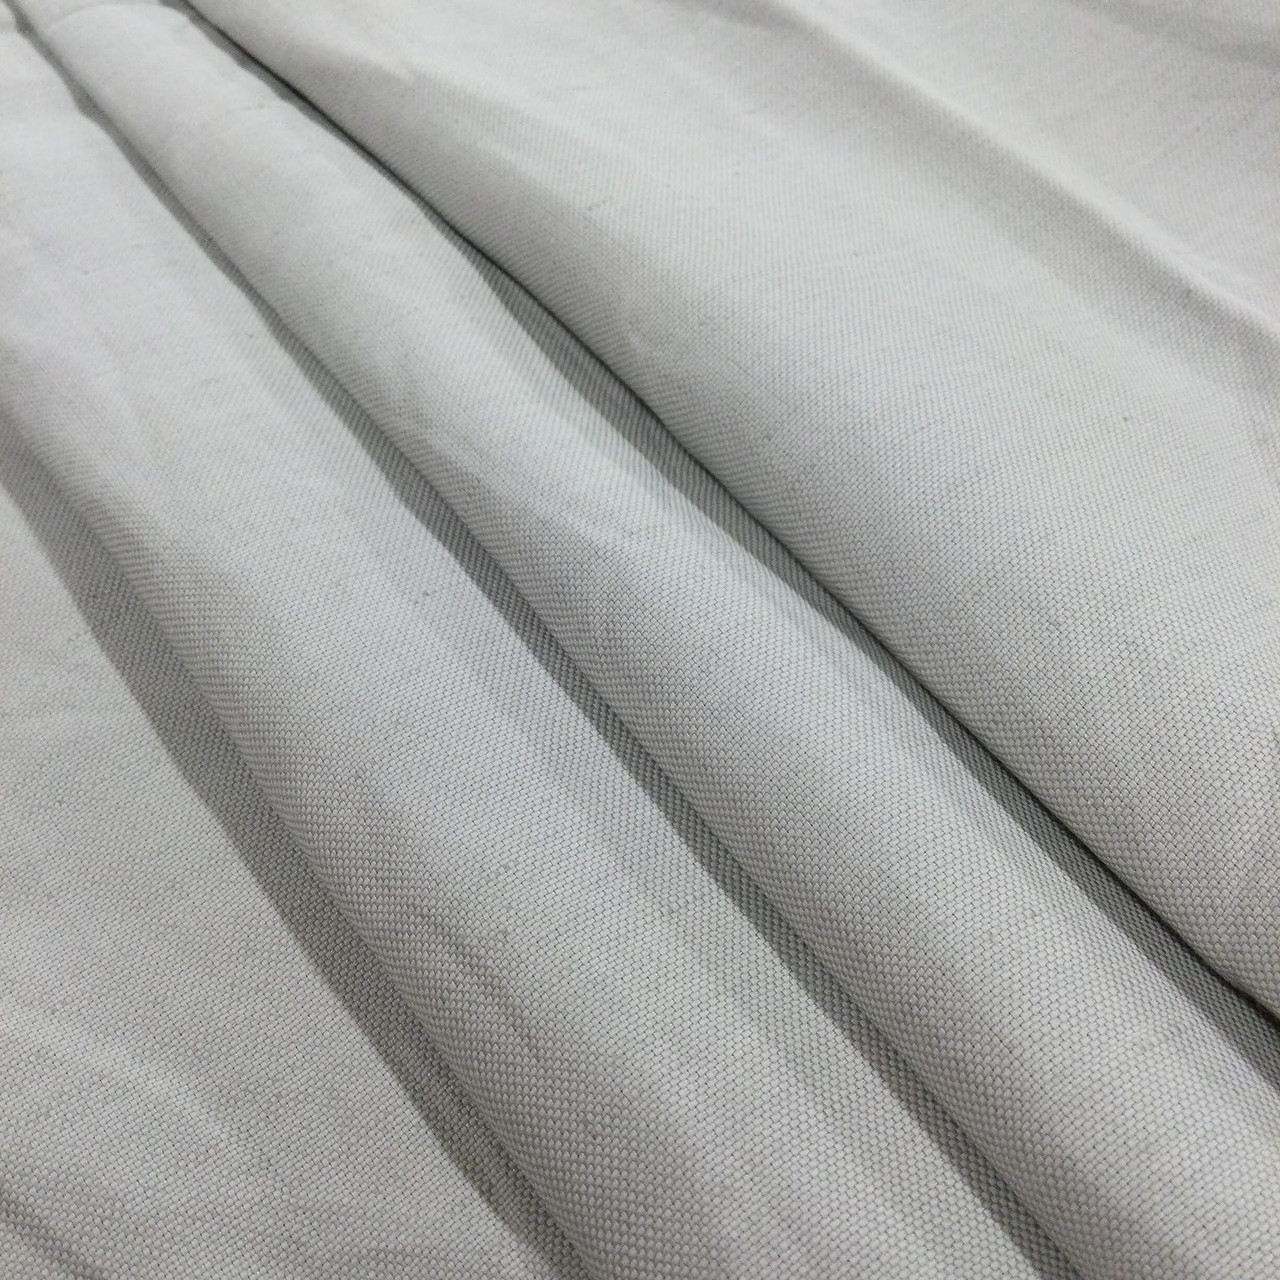 Cotton Broadcloth, Types of Cotton Fabrics